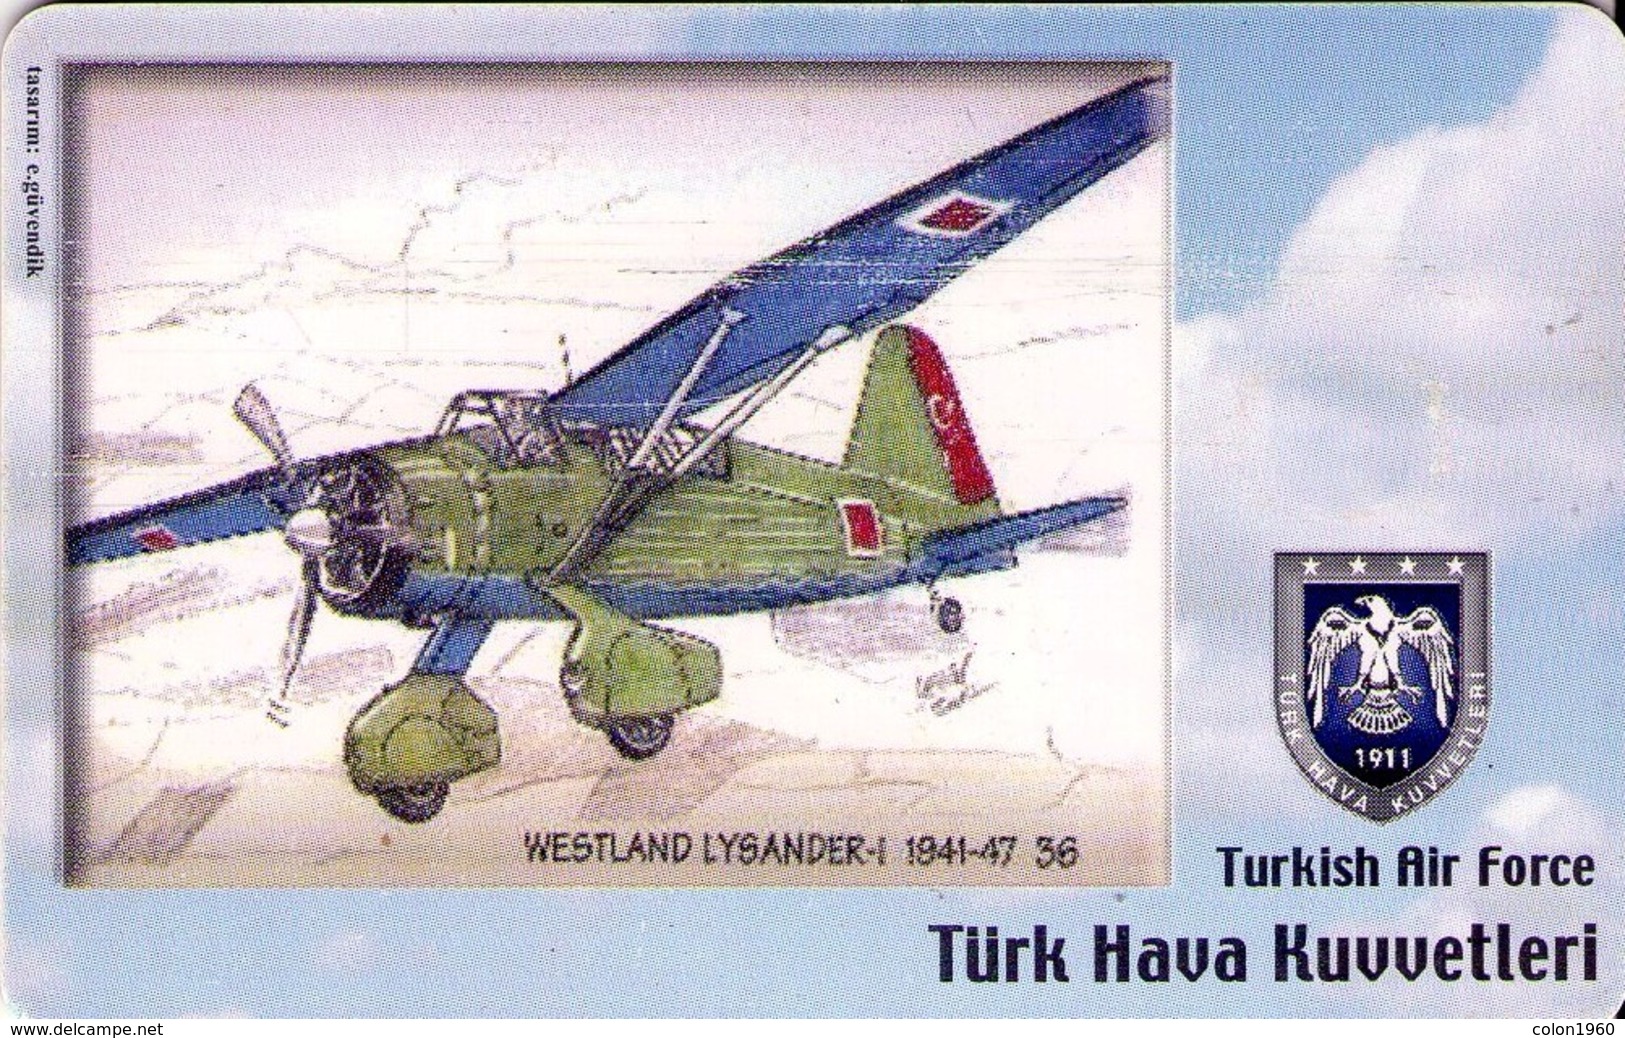 TARJETA TELEFONICA DE TURQUIA, AVIONES. (CHIP) TURKISH AIR FORCE, WESTLAND LYSANDER-I 1941-47, TR-TT-C-0138 (116) - Avions